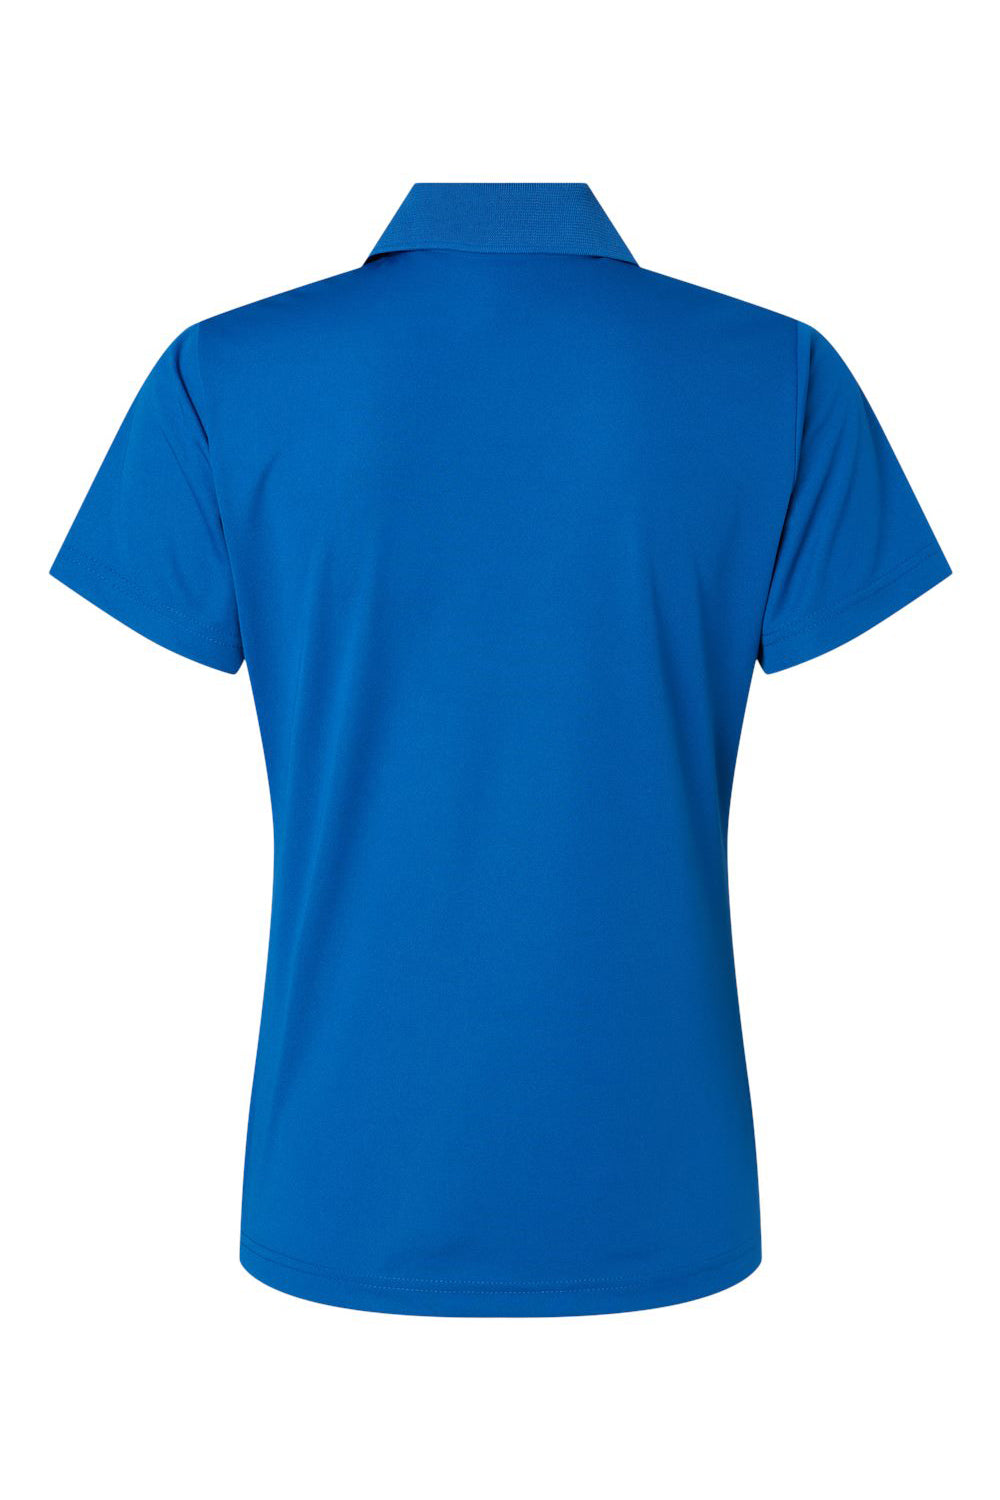 Paragon 504 Womens Sebring Performance Short Sleeve Polo Shirt Deep Royal Blue Flat Back